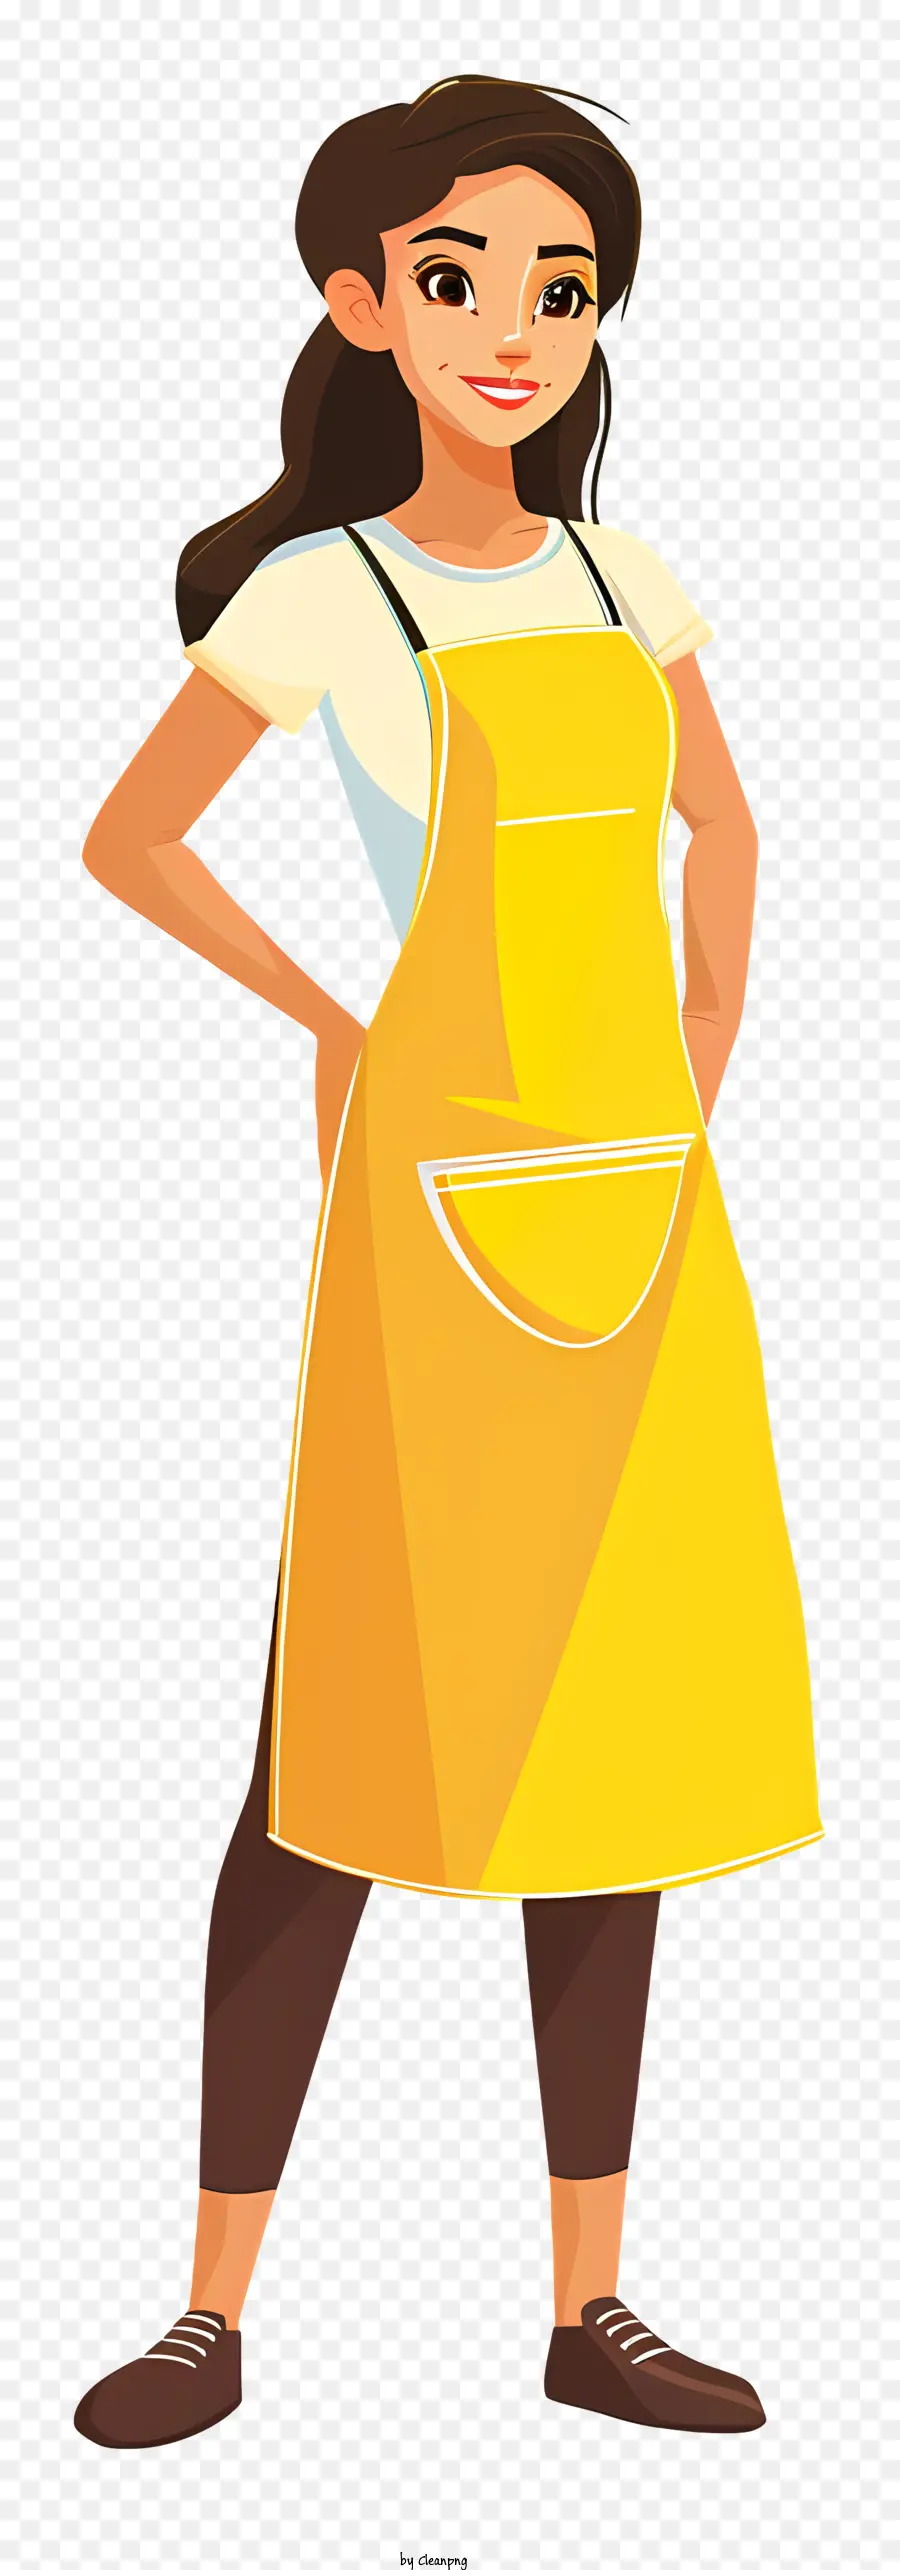 Cucinare Donna A Gpareon Apron Giallo sorridente sorridente - Donna in grembiule giallo che sorride alla telecamera